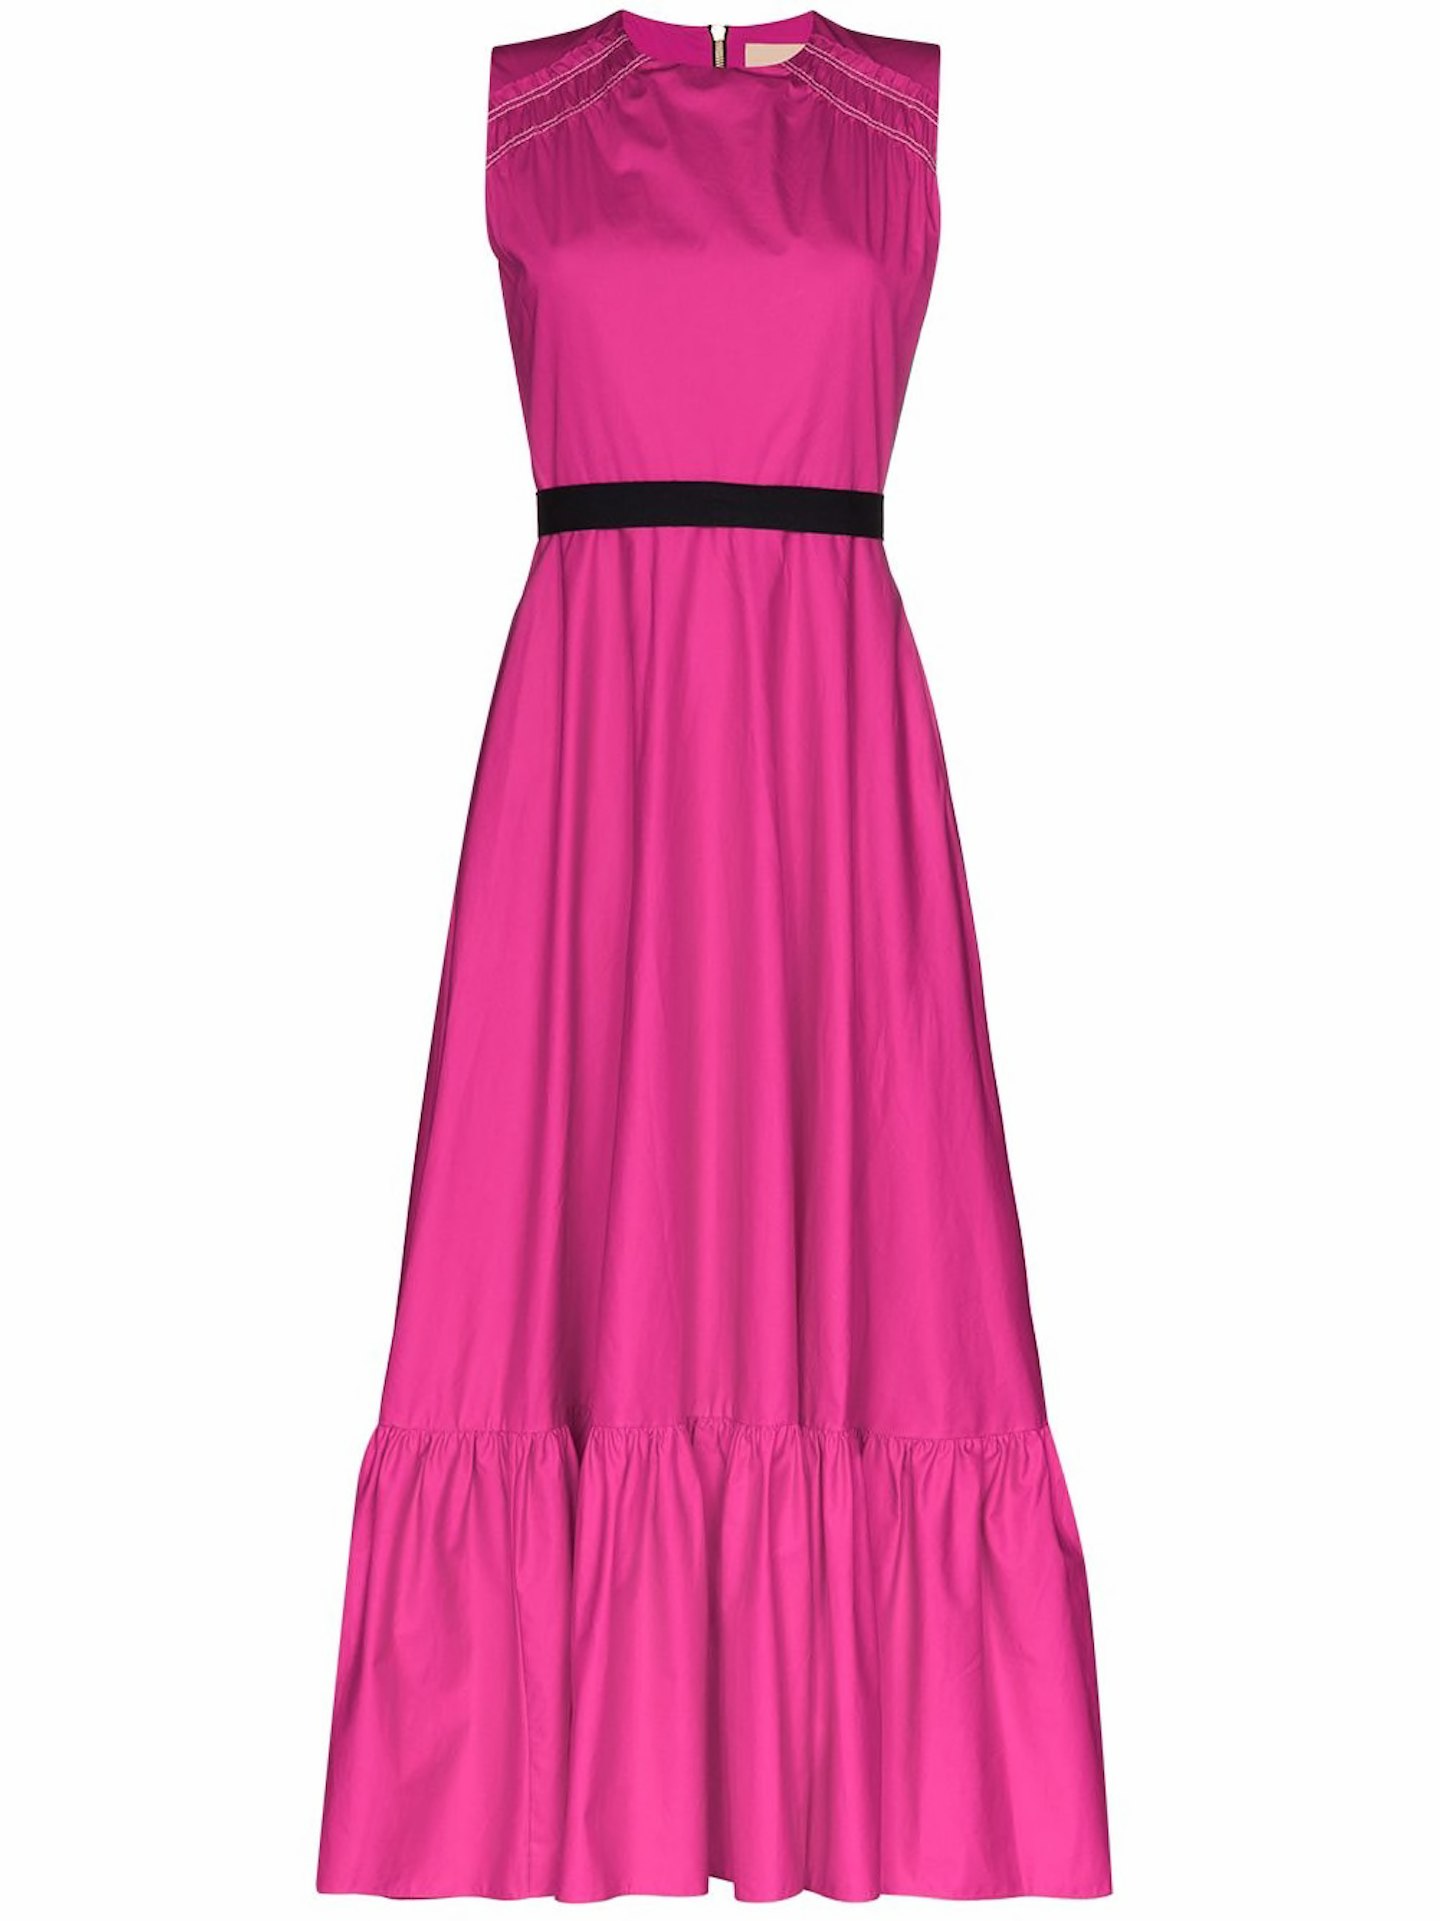 Roksanda, Blaise Waist-Sash Cotton-Poplin Dress, £850 at Matches Fashion